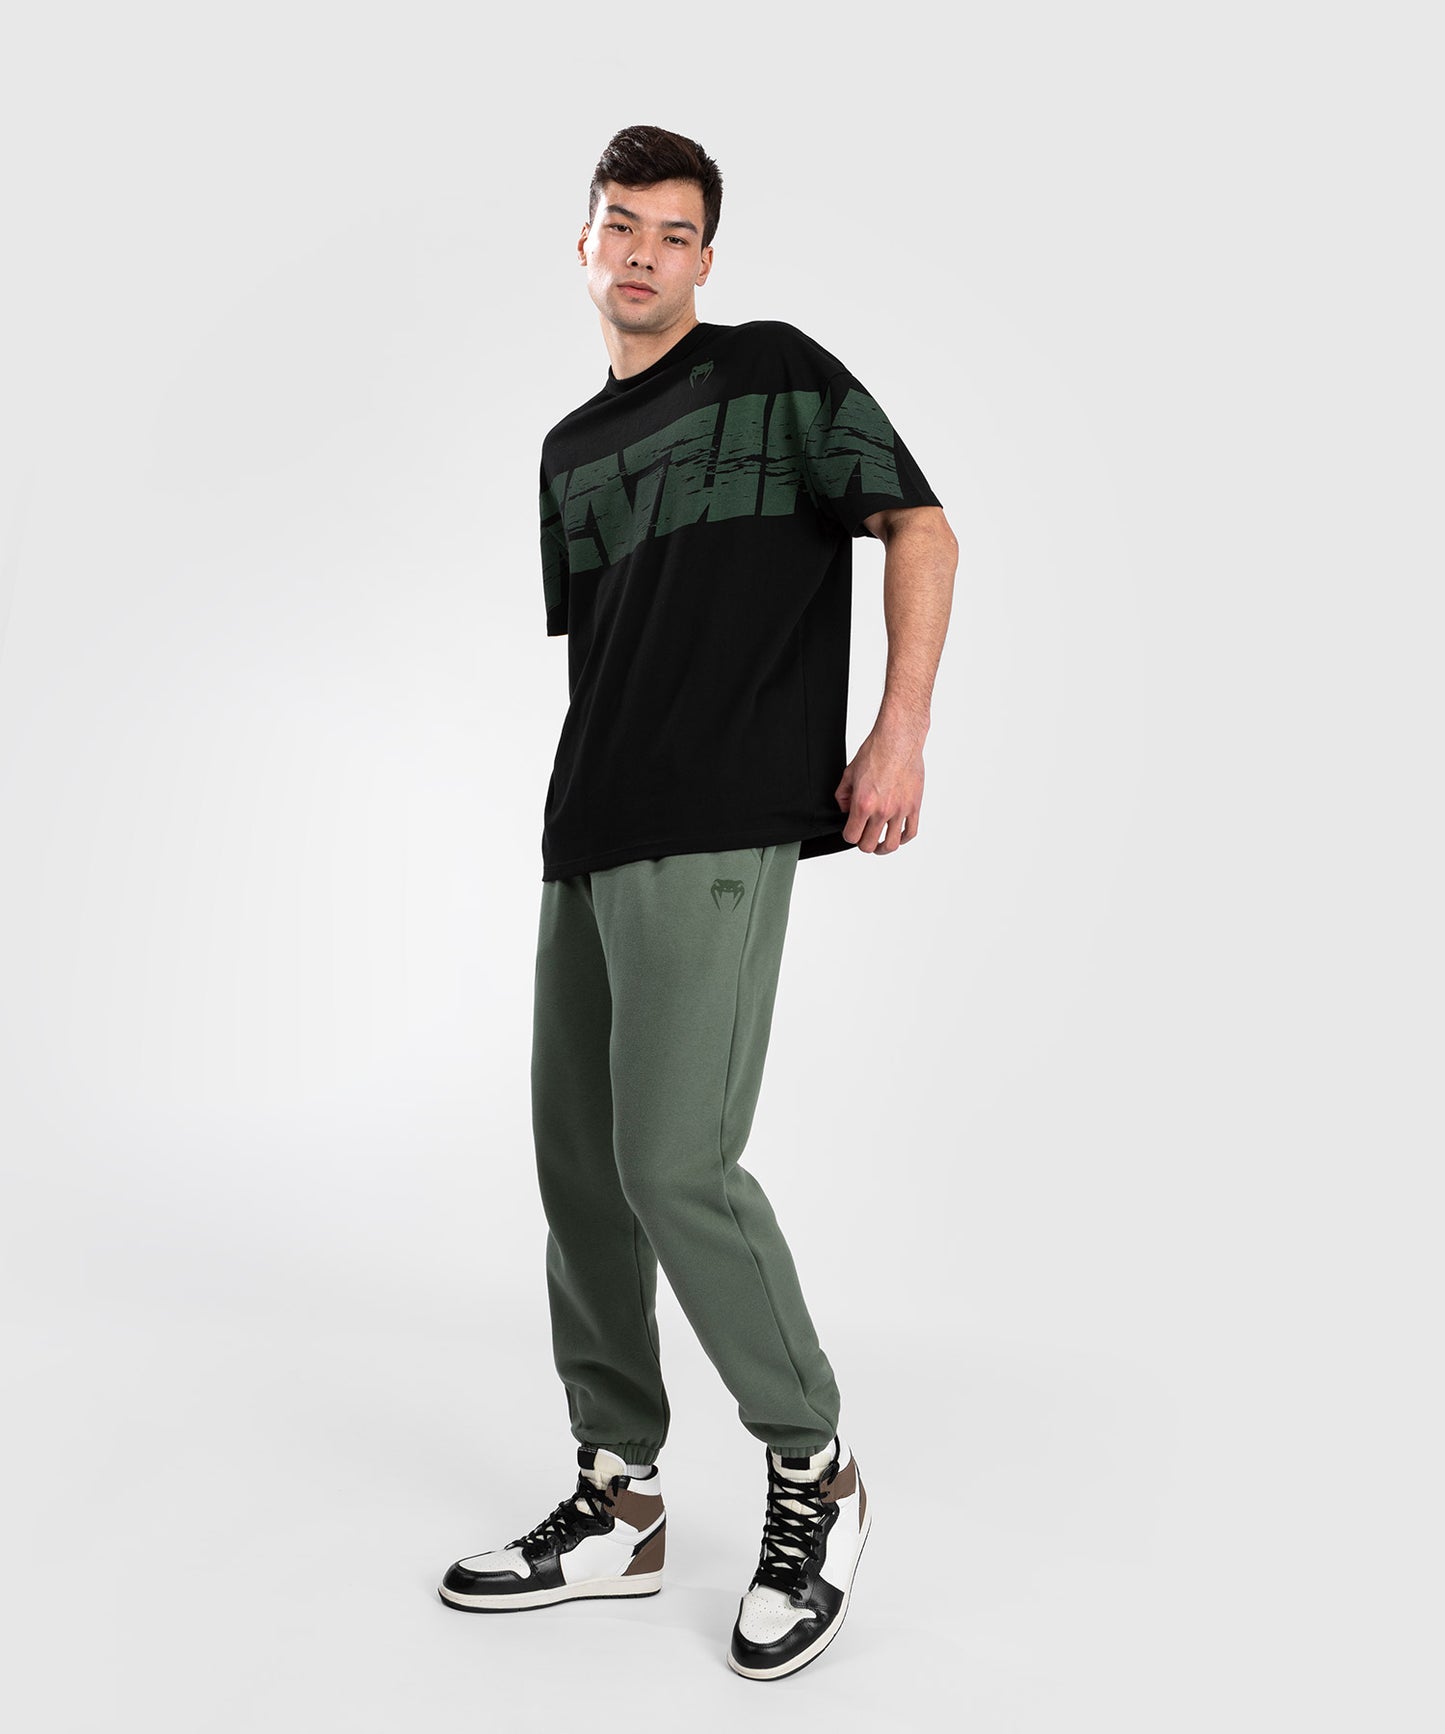 Venum Connect XL T-shirt - Black/Green